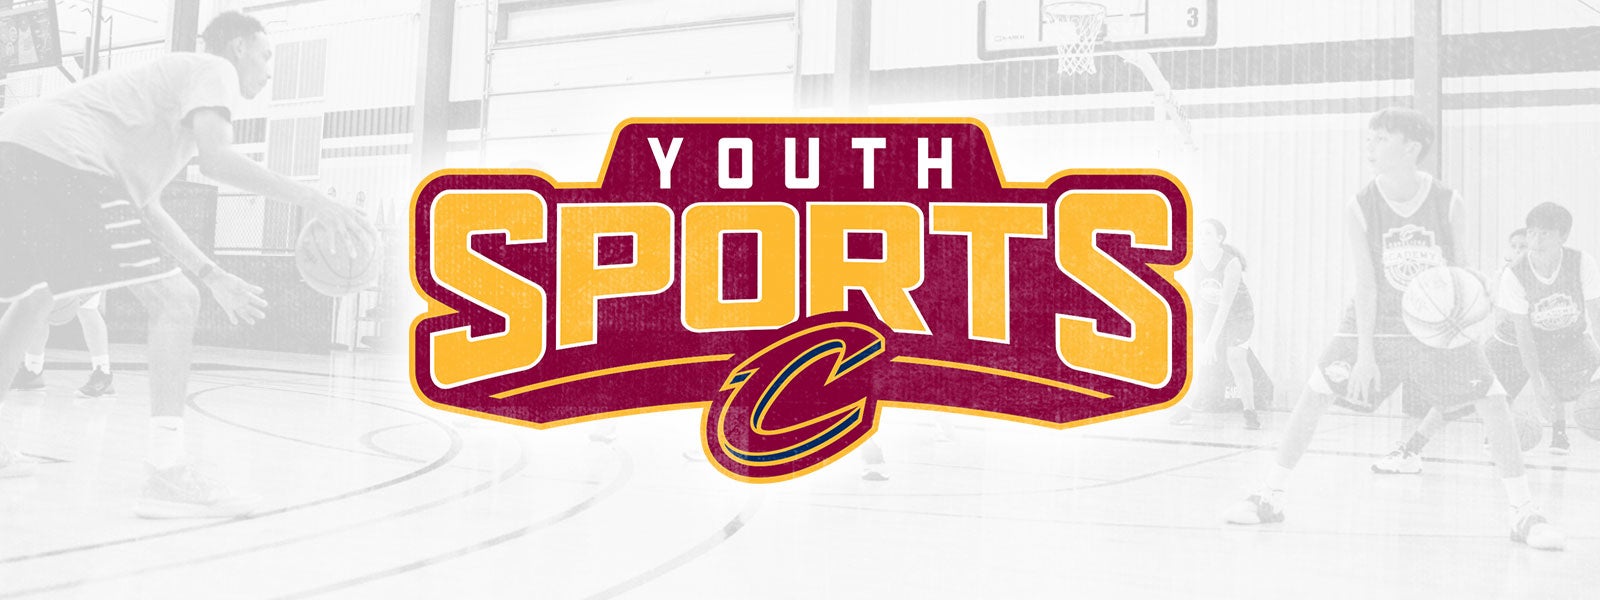 Cavs Youth Sports Spotlight